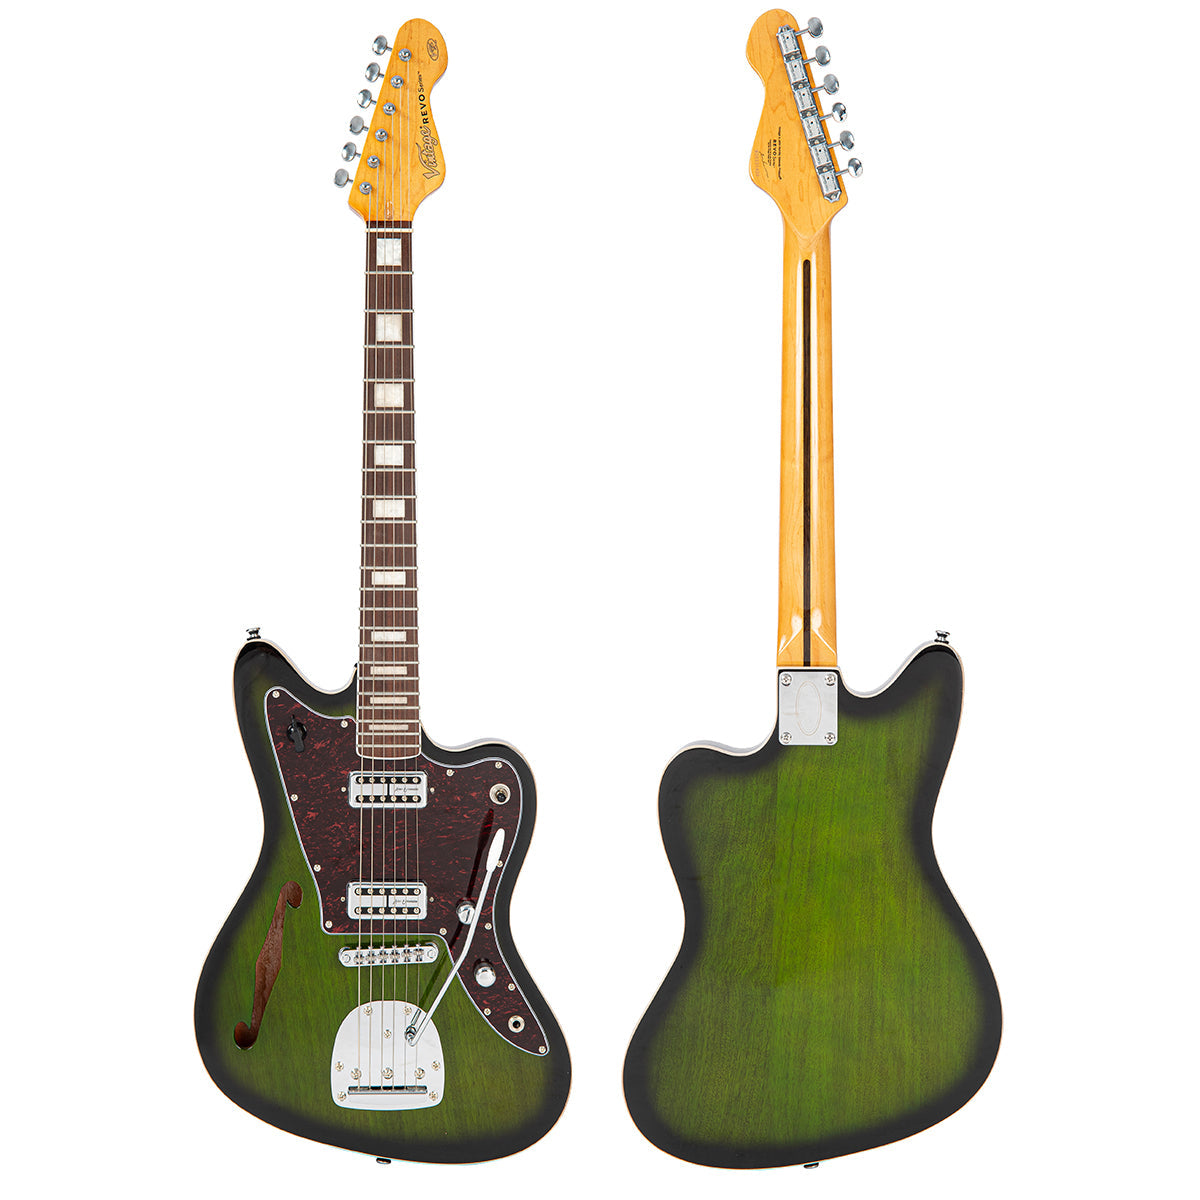 Vintage REVO Series 'Surfmaster Thinline' Twin Electric Guitar ~ Greenburst, Electric Guitars for sale at Richards Guitars.